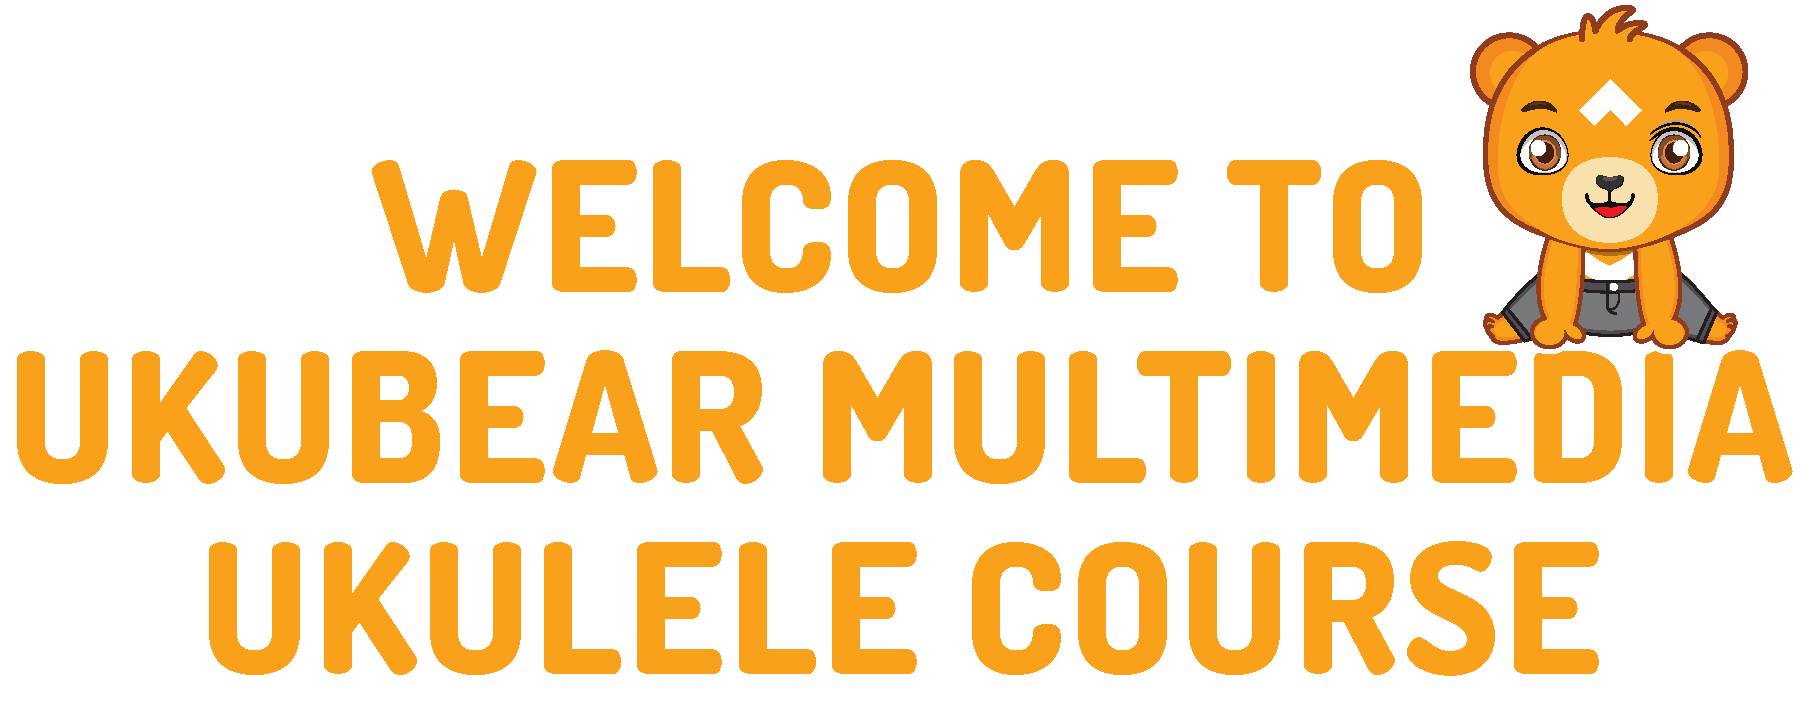 Welcome To Ukubear Multimedia Ukulele Course